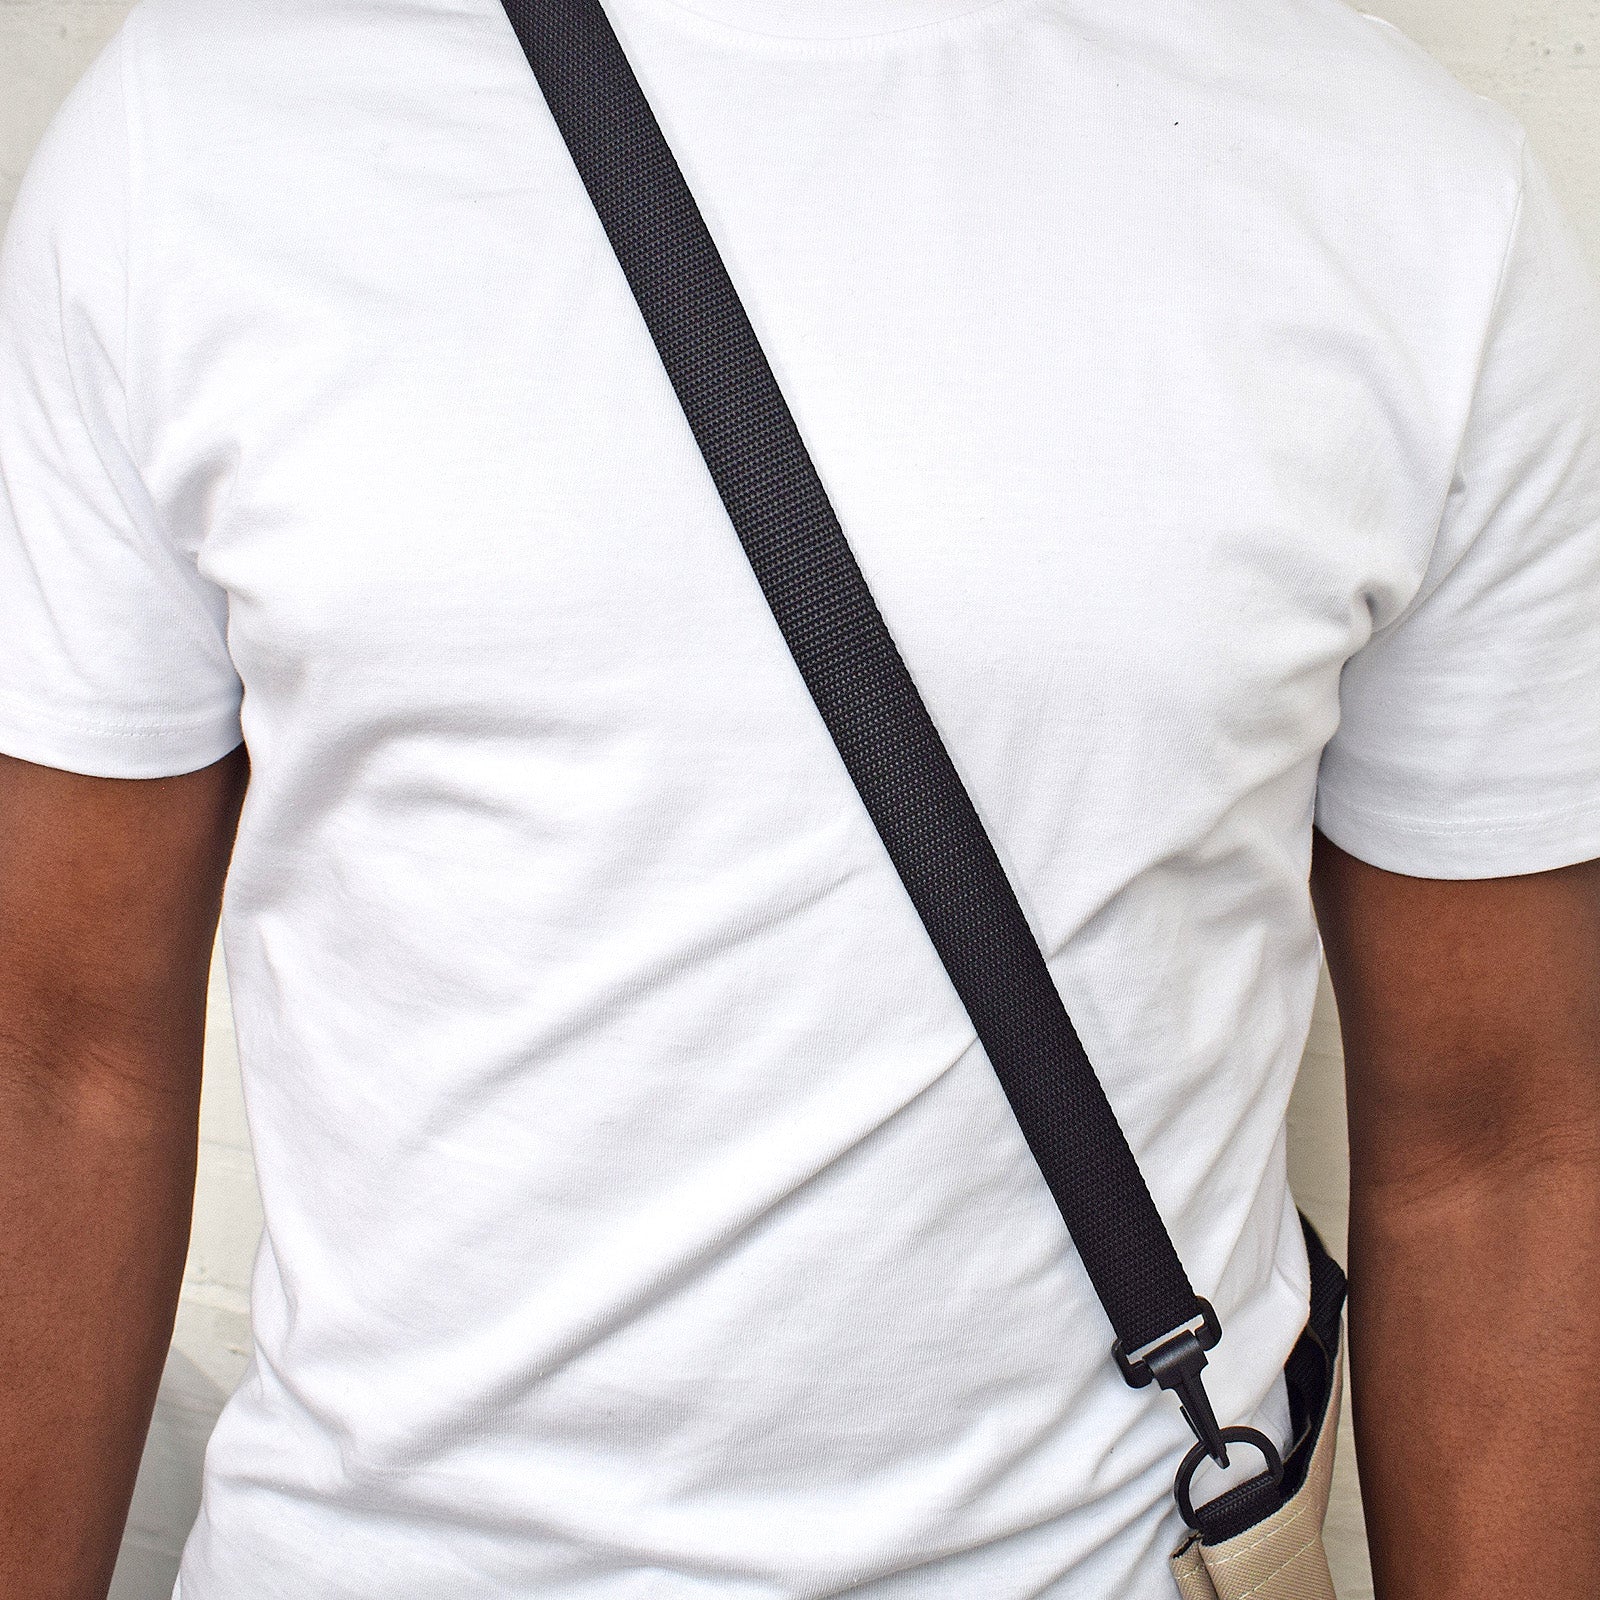 25mm shoulder strap worn across chest